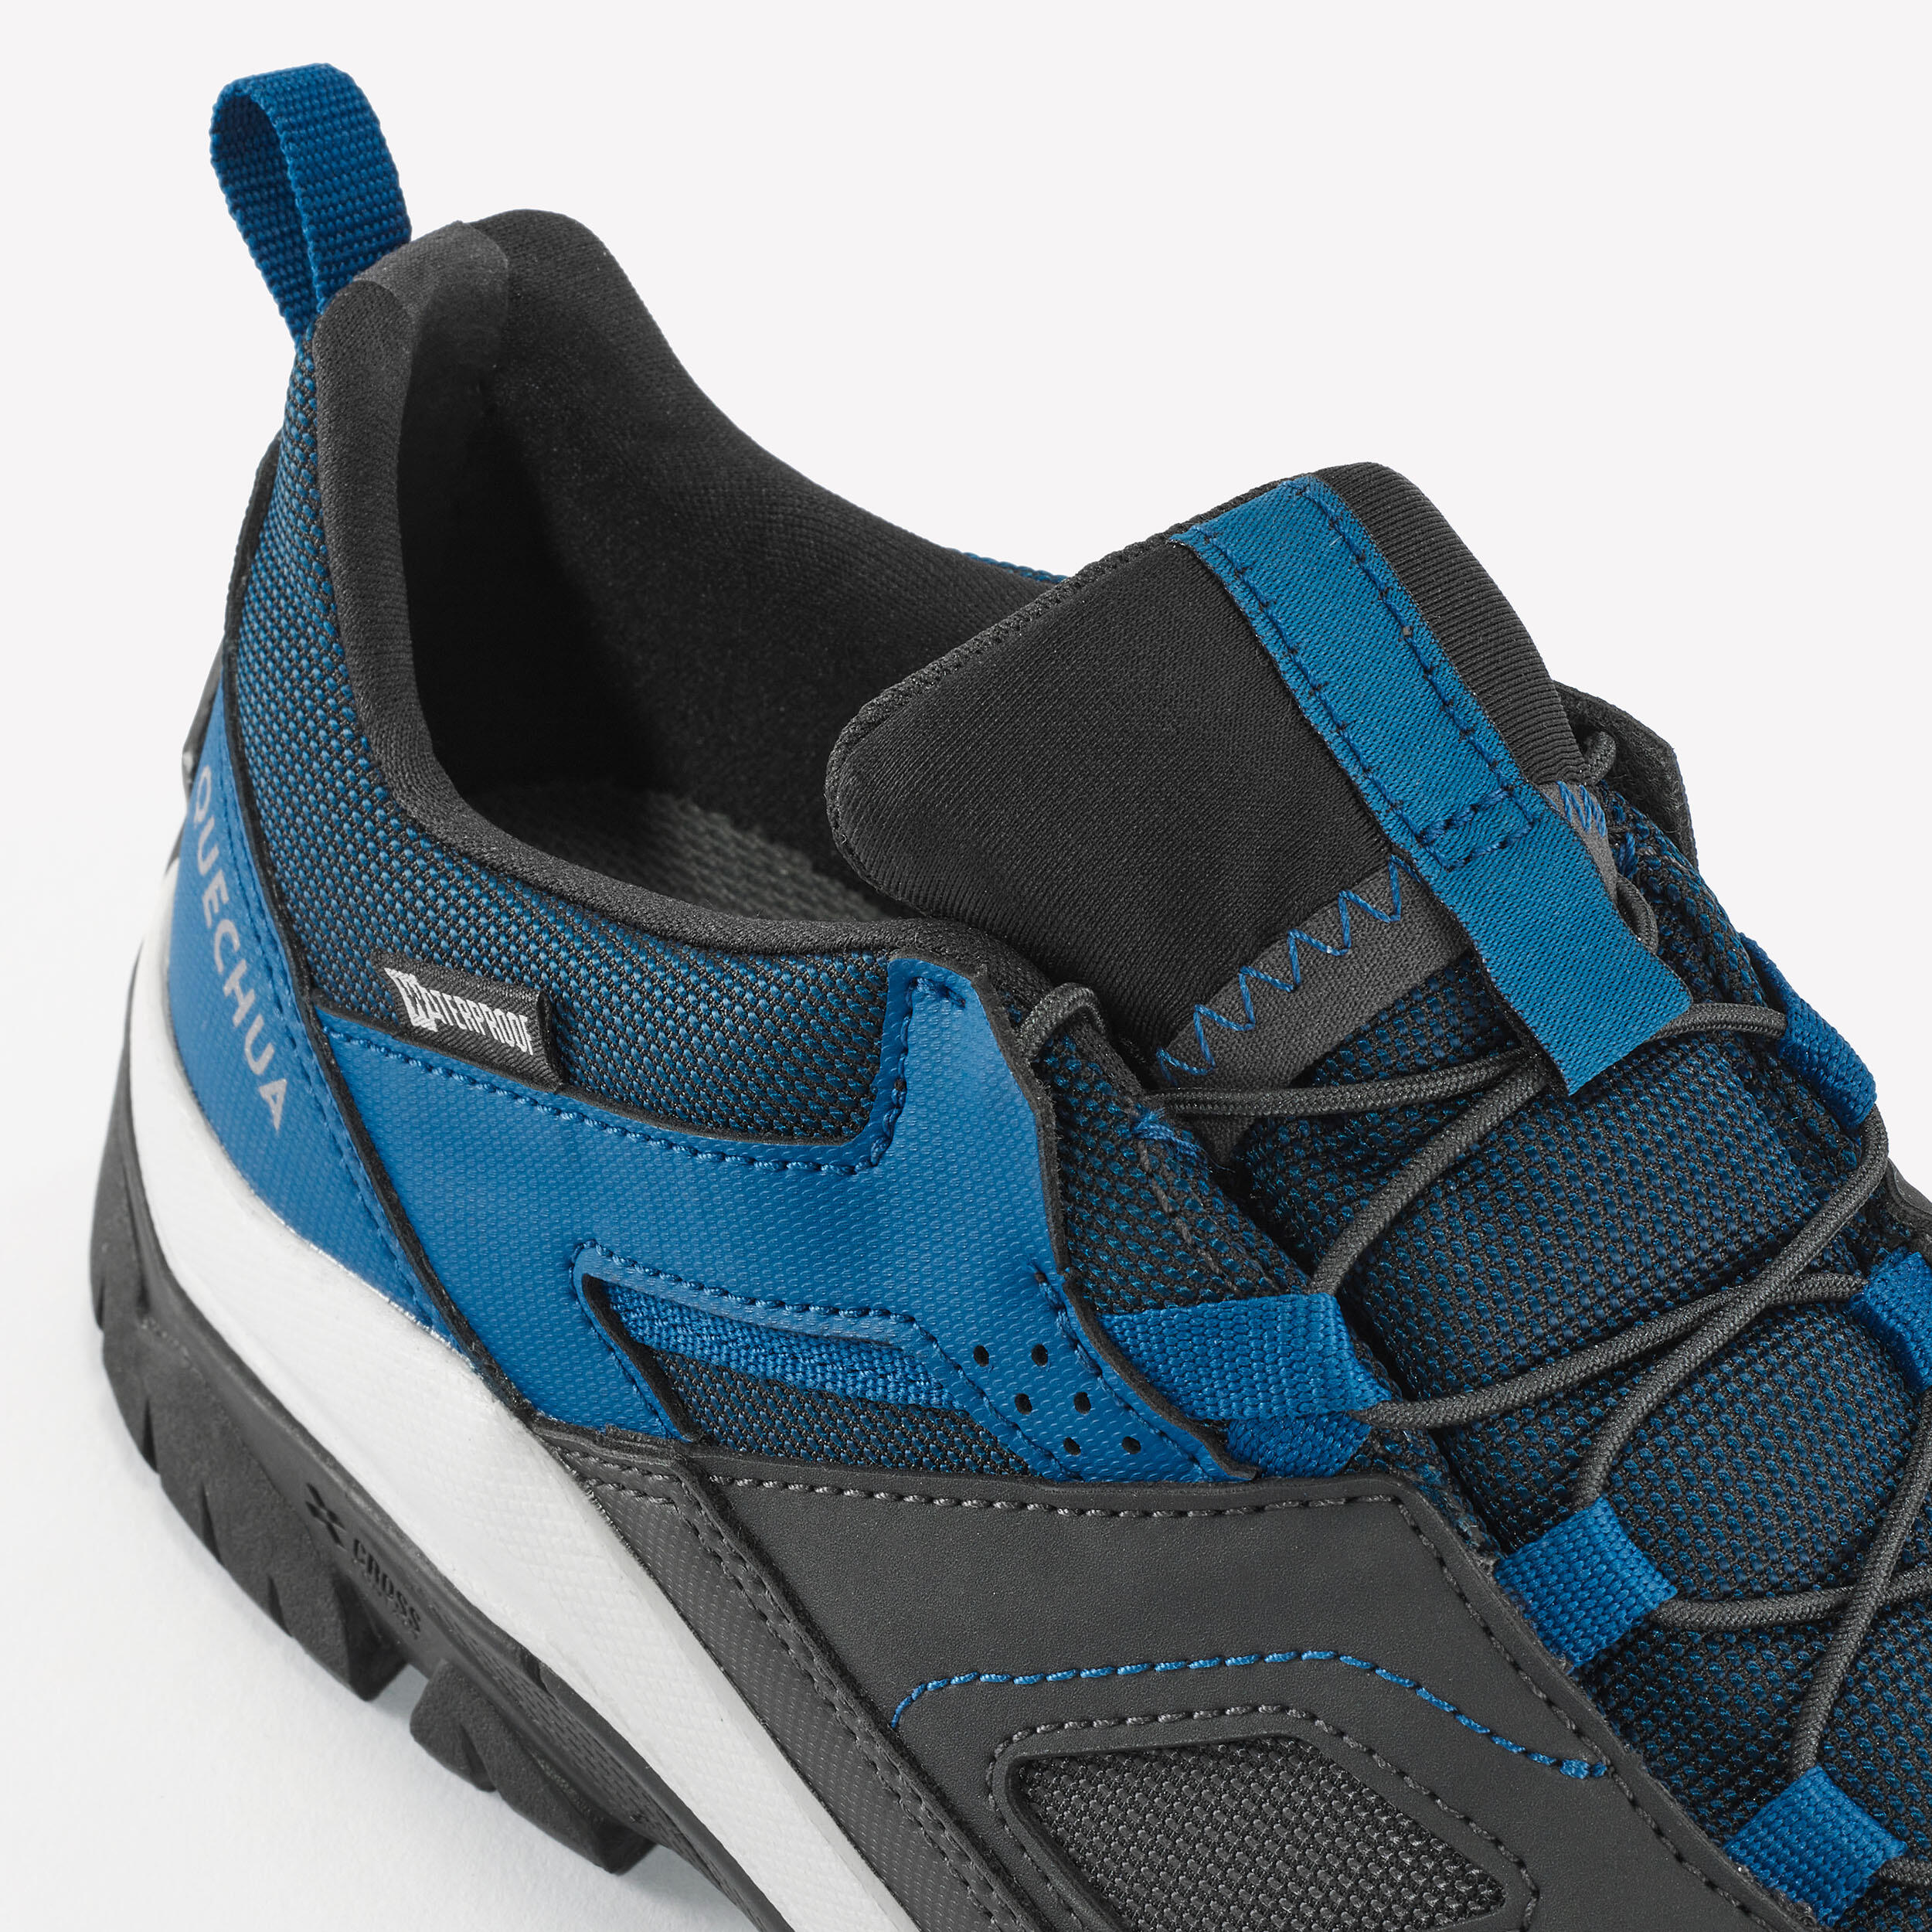 Kids’ Waterproof Lace-up Hiking Shoes - CROSSROCK UK size 2.5 - 5 - Blue 9/10